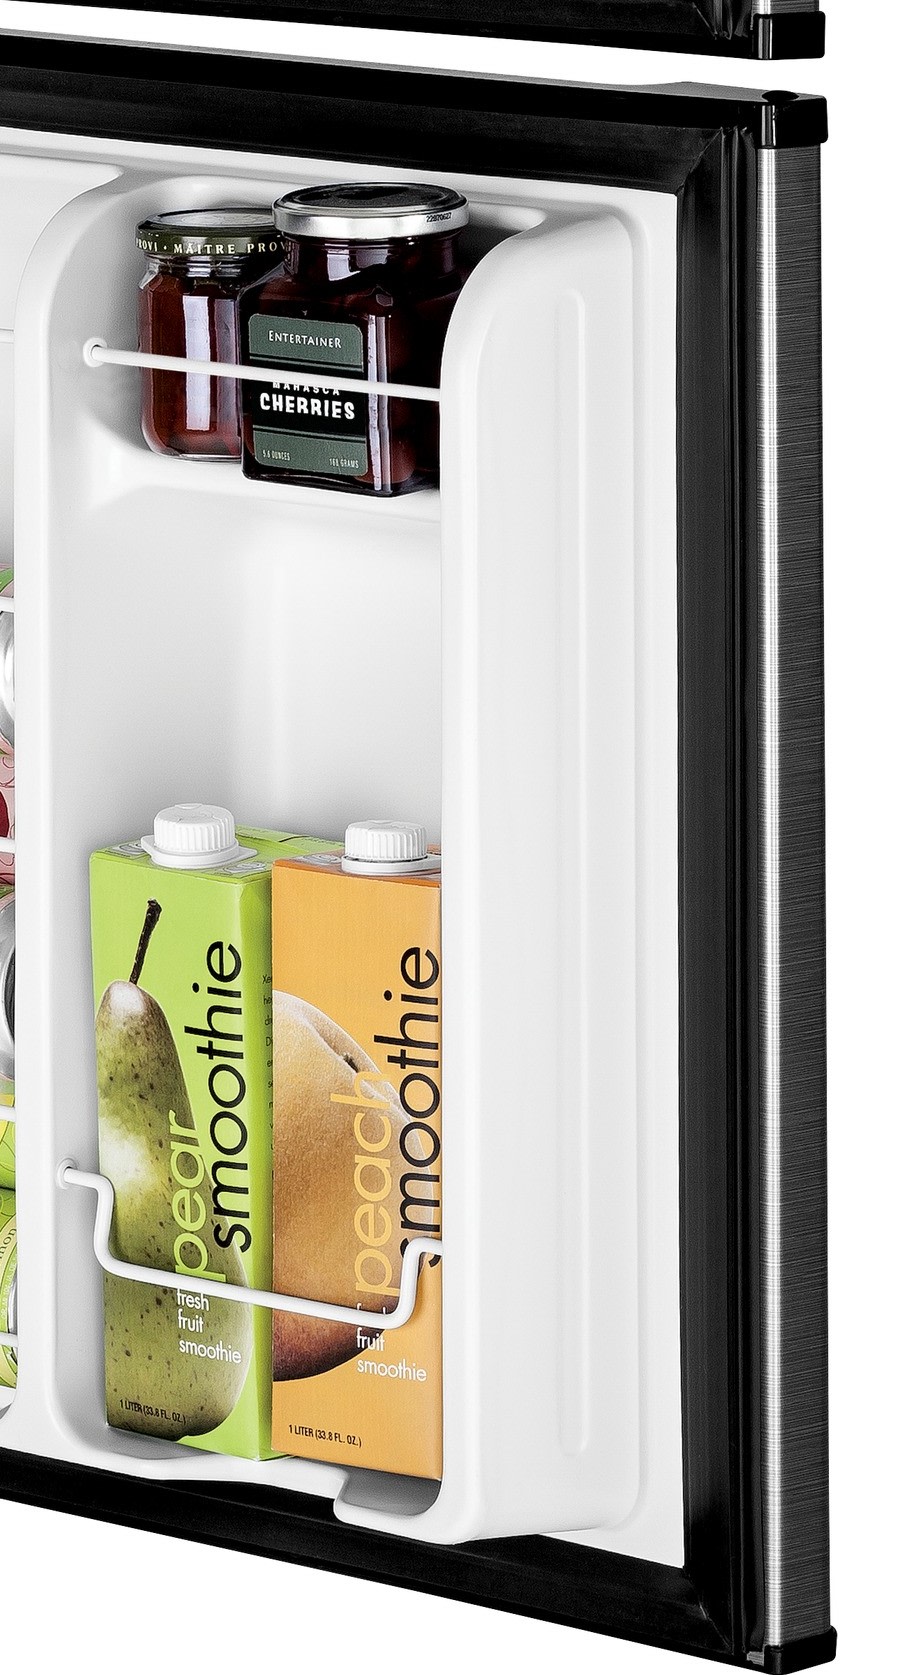 GE Appliances 3.1 Cubic Feet Double-Door Compact Refrigerator in